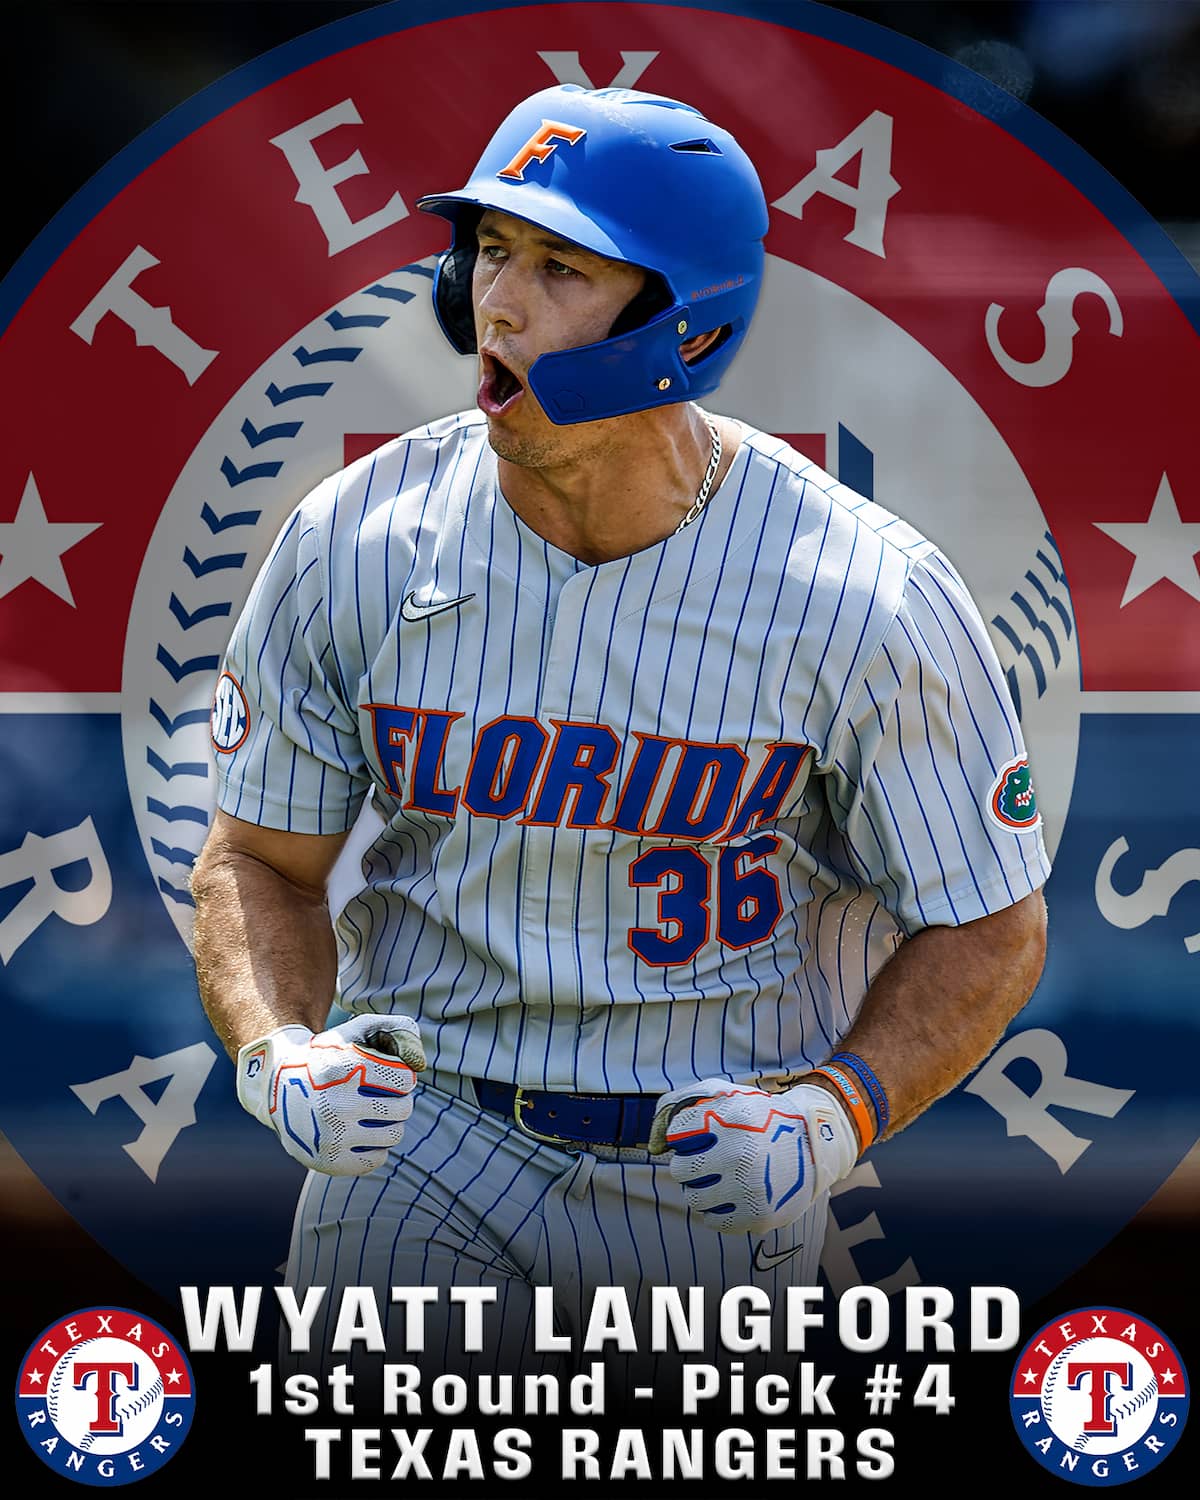 Texas Rangers Prospect Wyatt Langford Hit His First Home Run